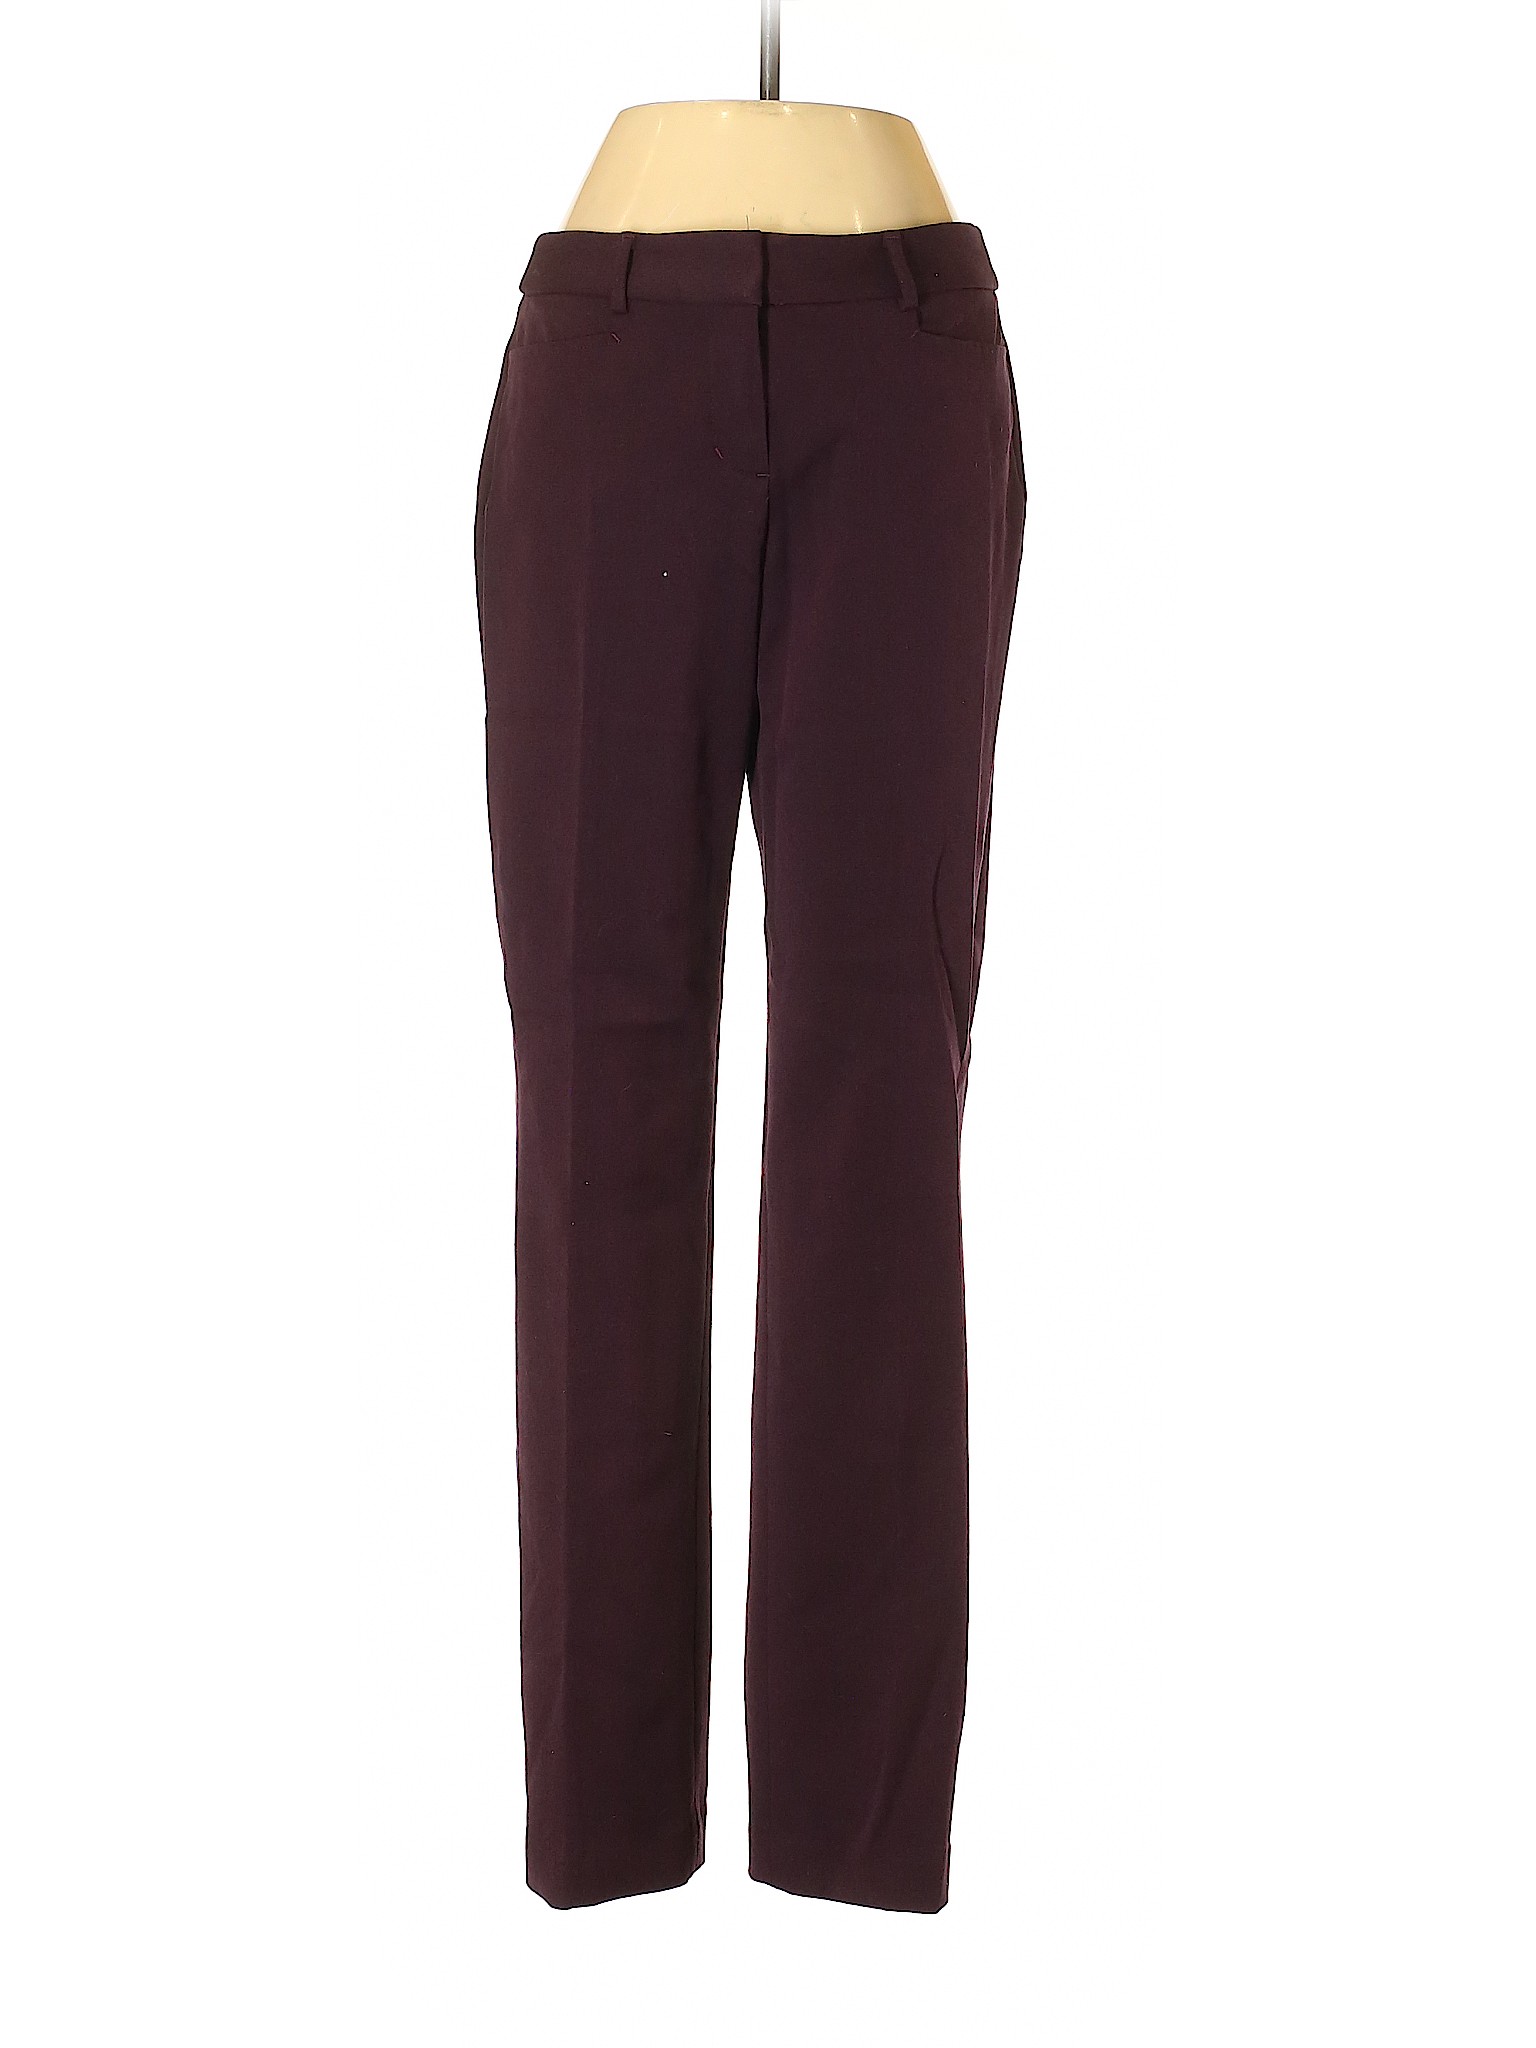 Express Women Purple Dress Pants 2 | eBay